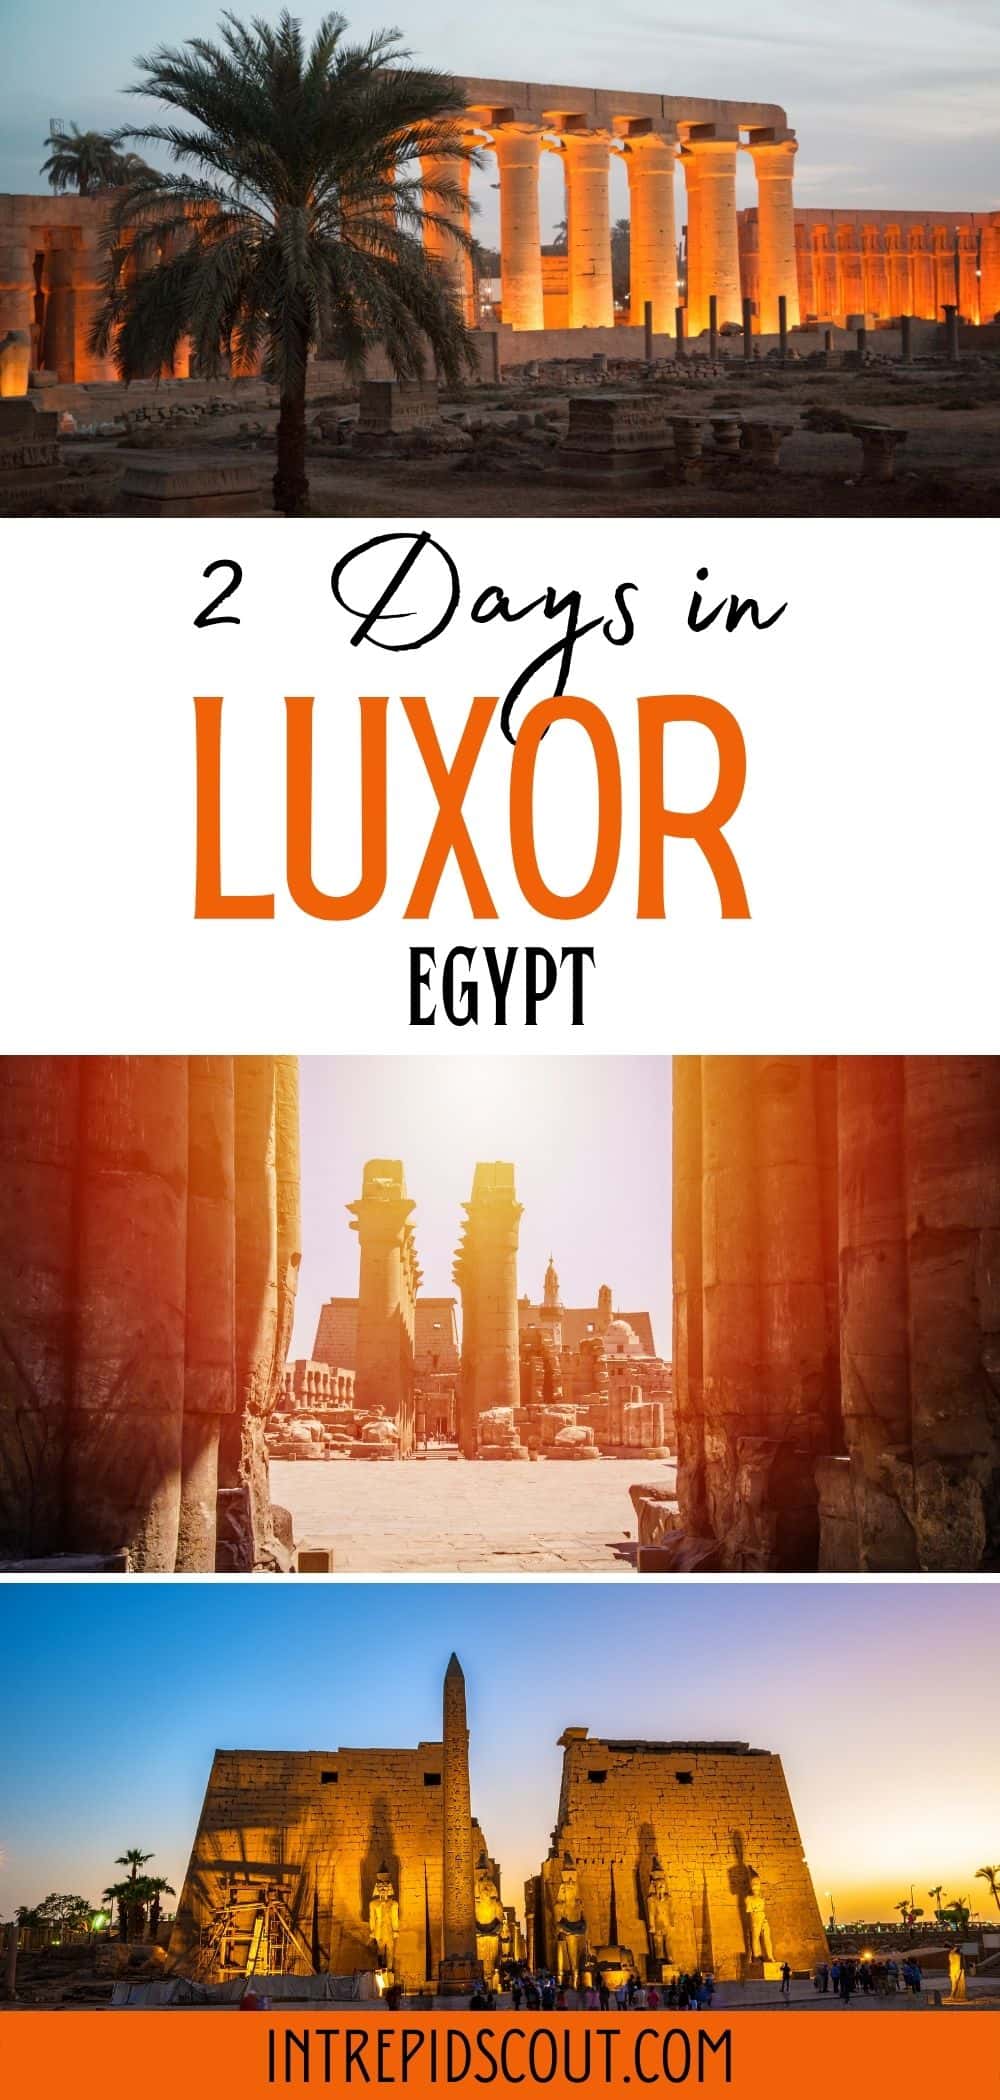 2 Days in Luxor